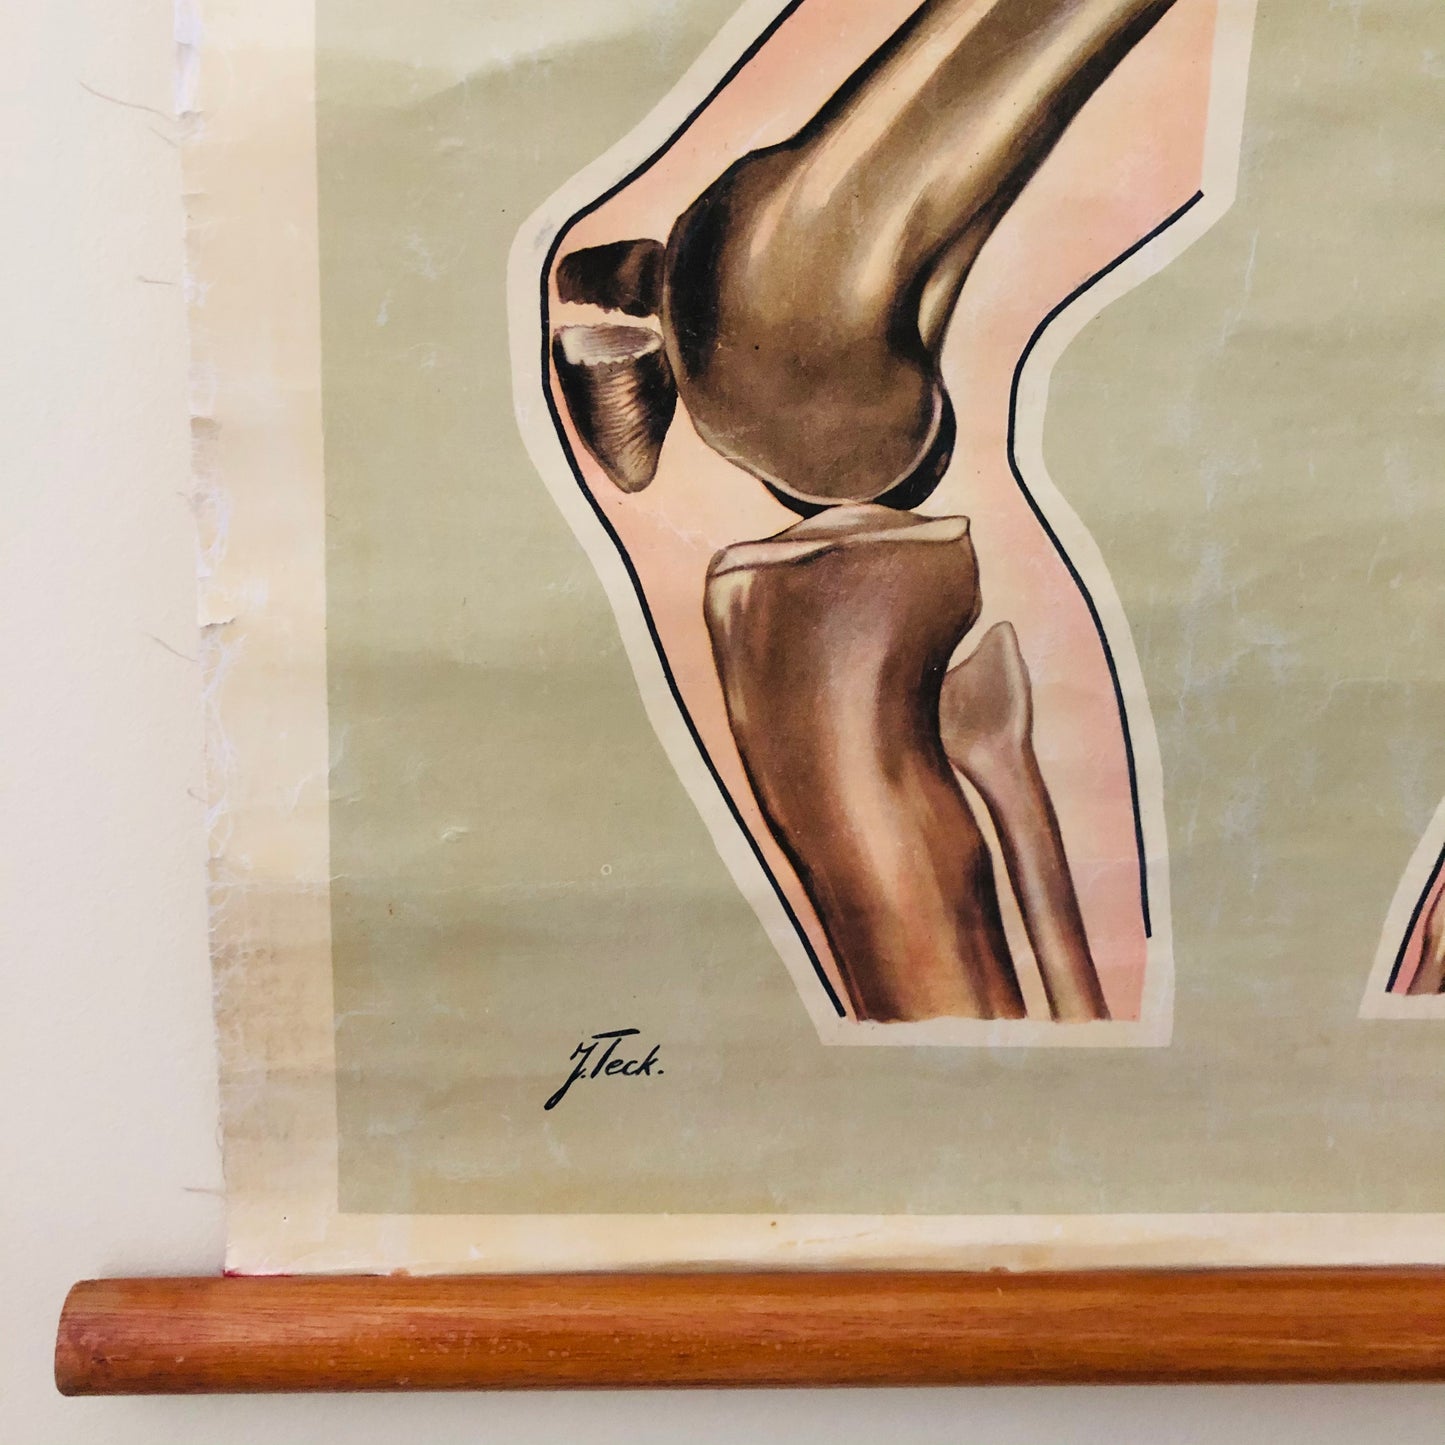 Vintage Fracture Poster St John Ambulance Anatomical By J Teck